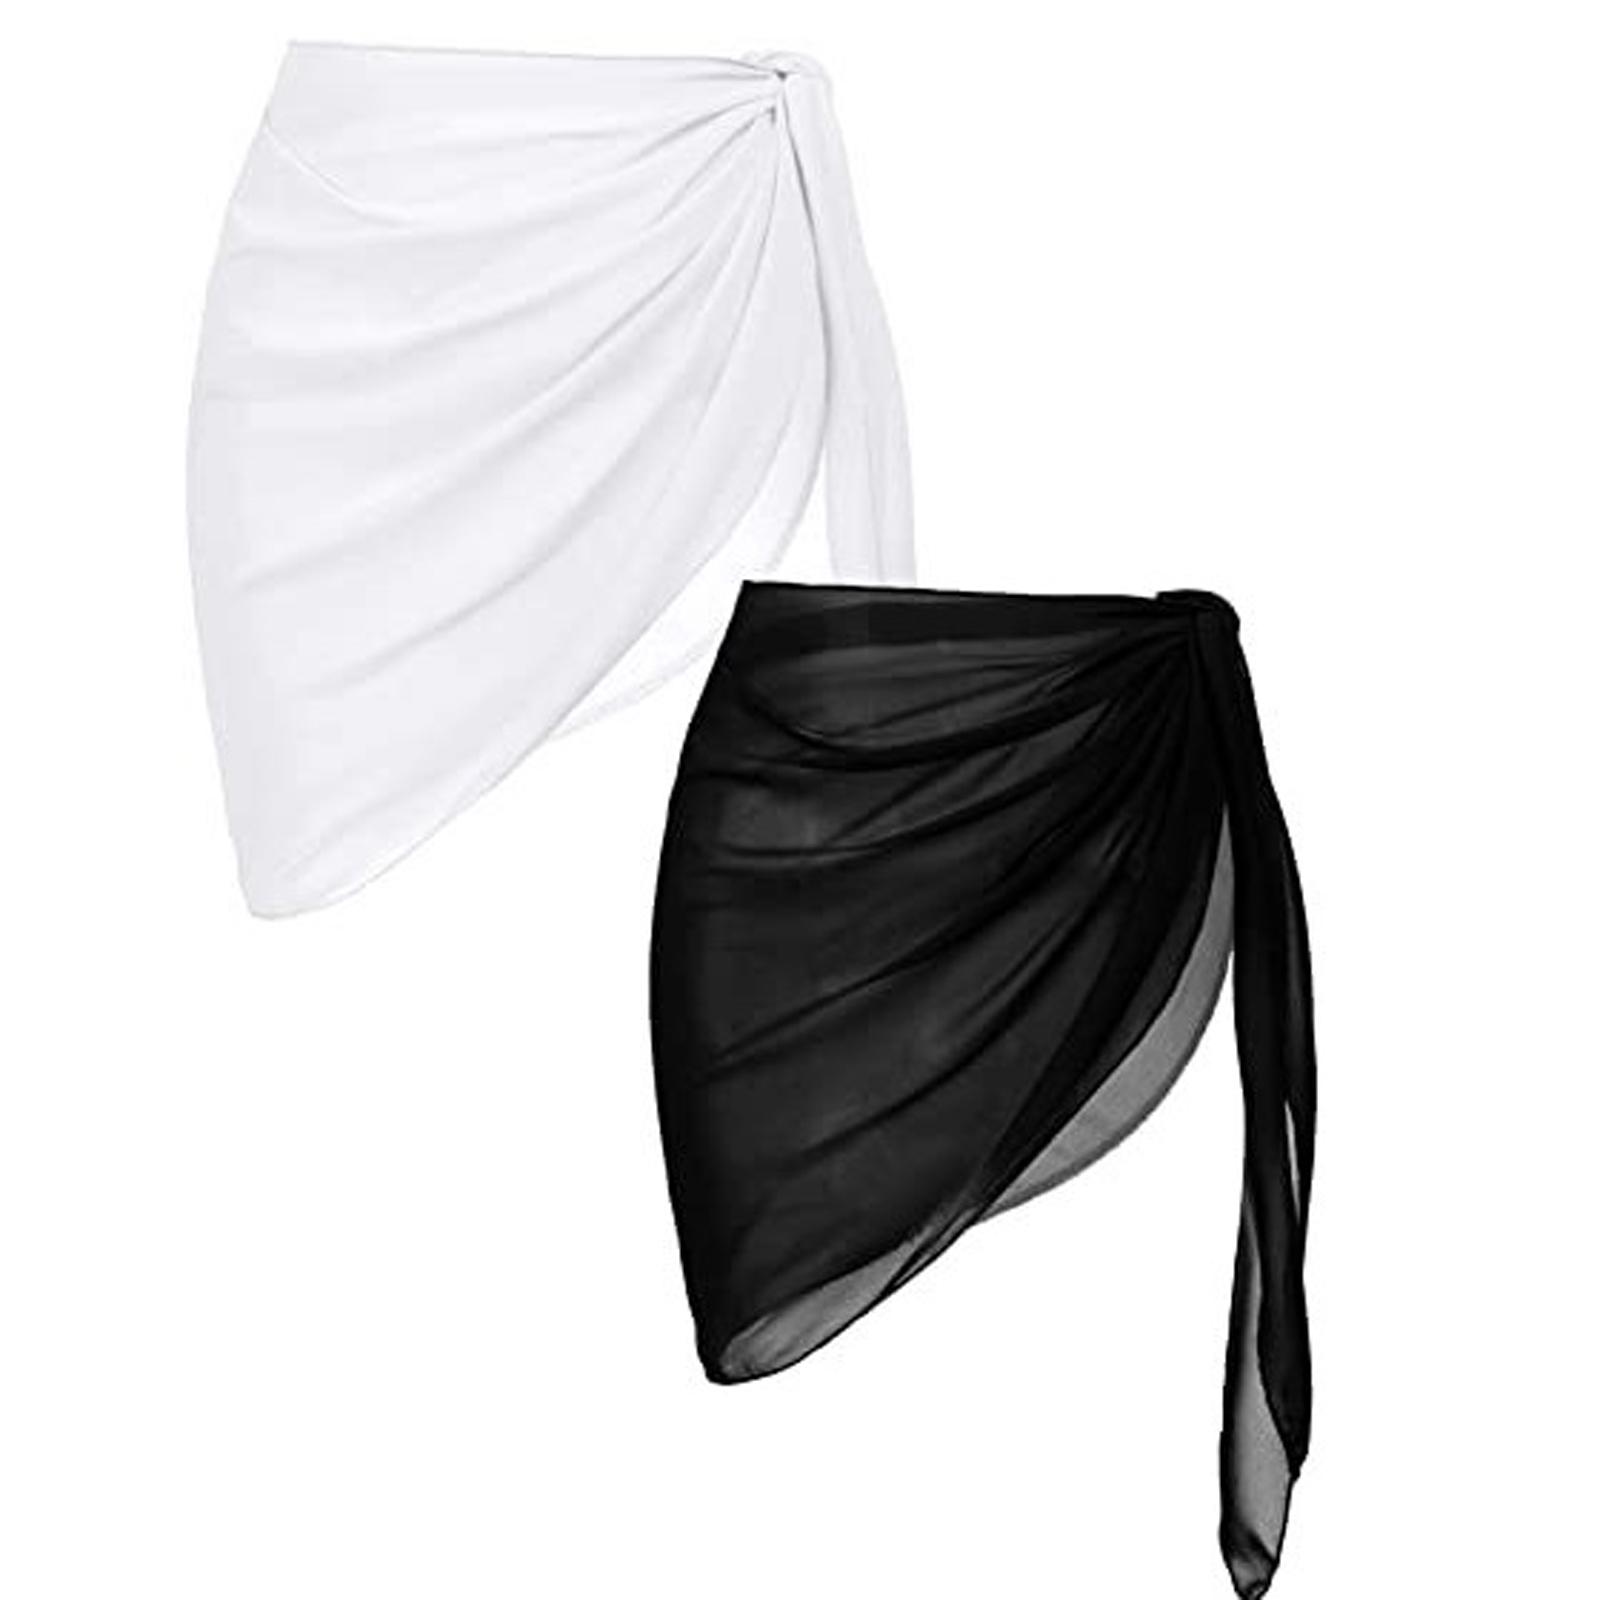 Chiffon Cover Up Solid Women's Summer Bathing Suit Bottom Short Skirt 50cmx140cm Black